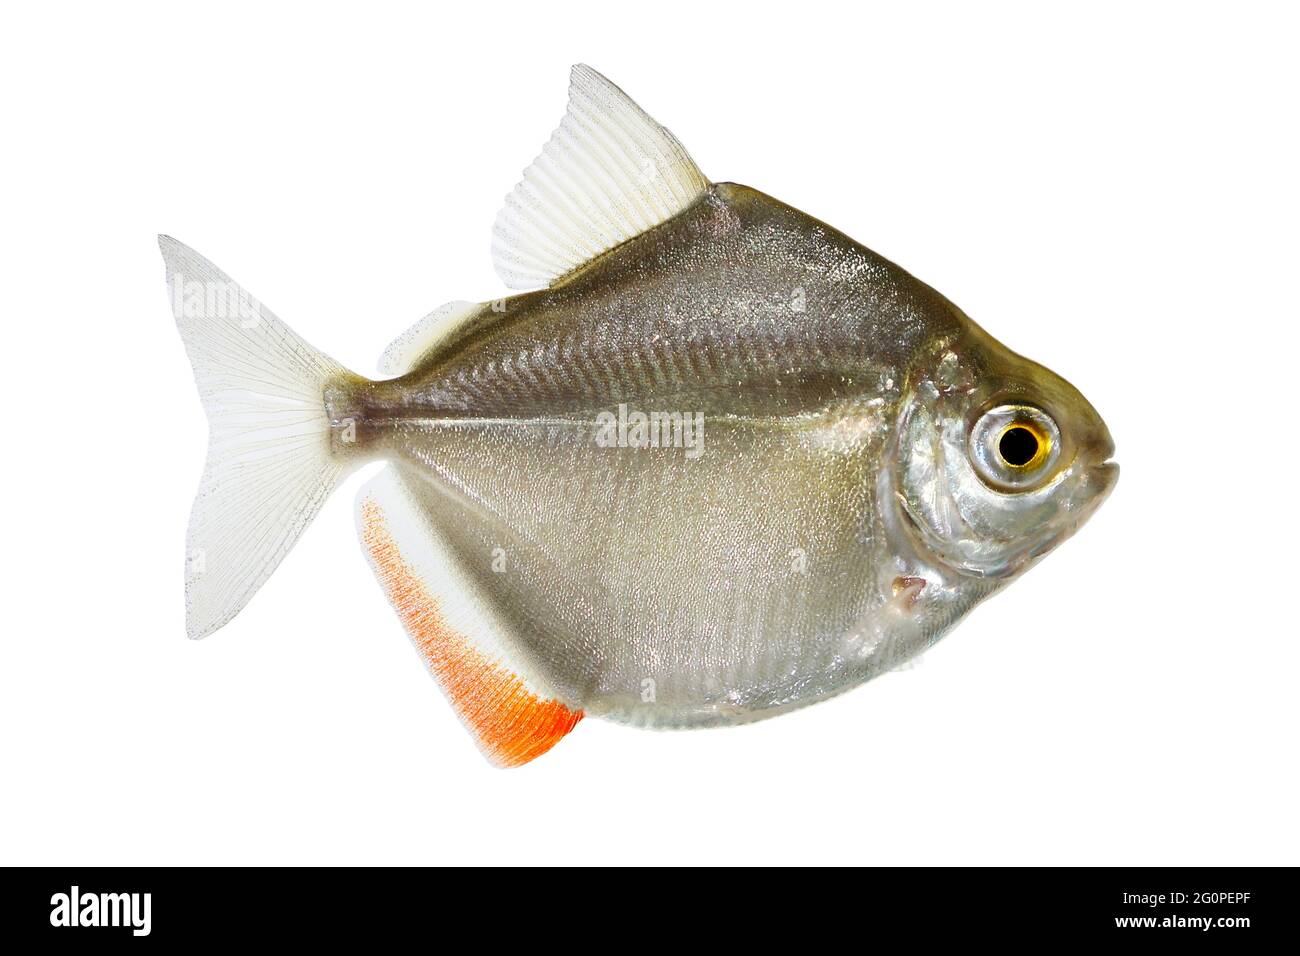 Silver dollar genus metynnis schooling aquarium fish Stock Photo